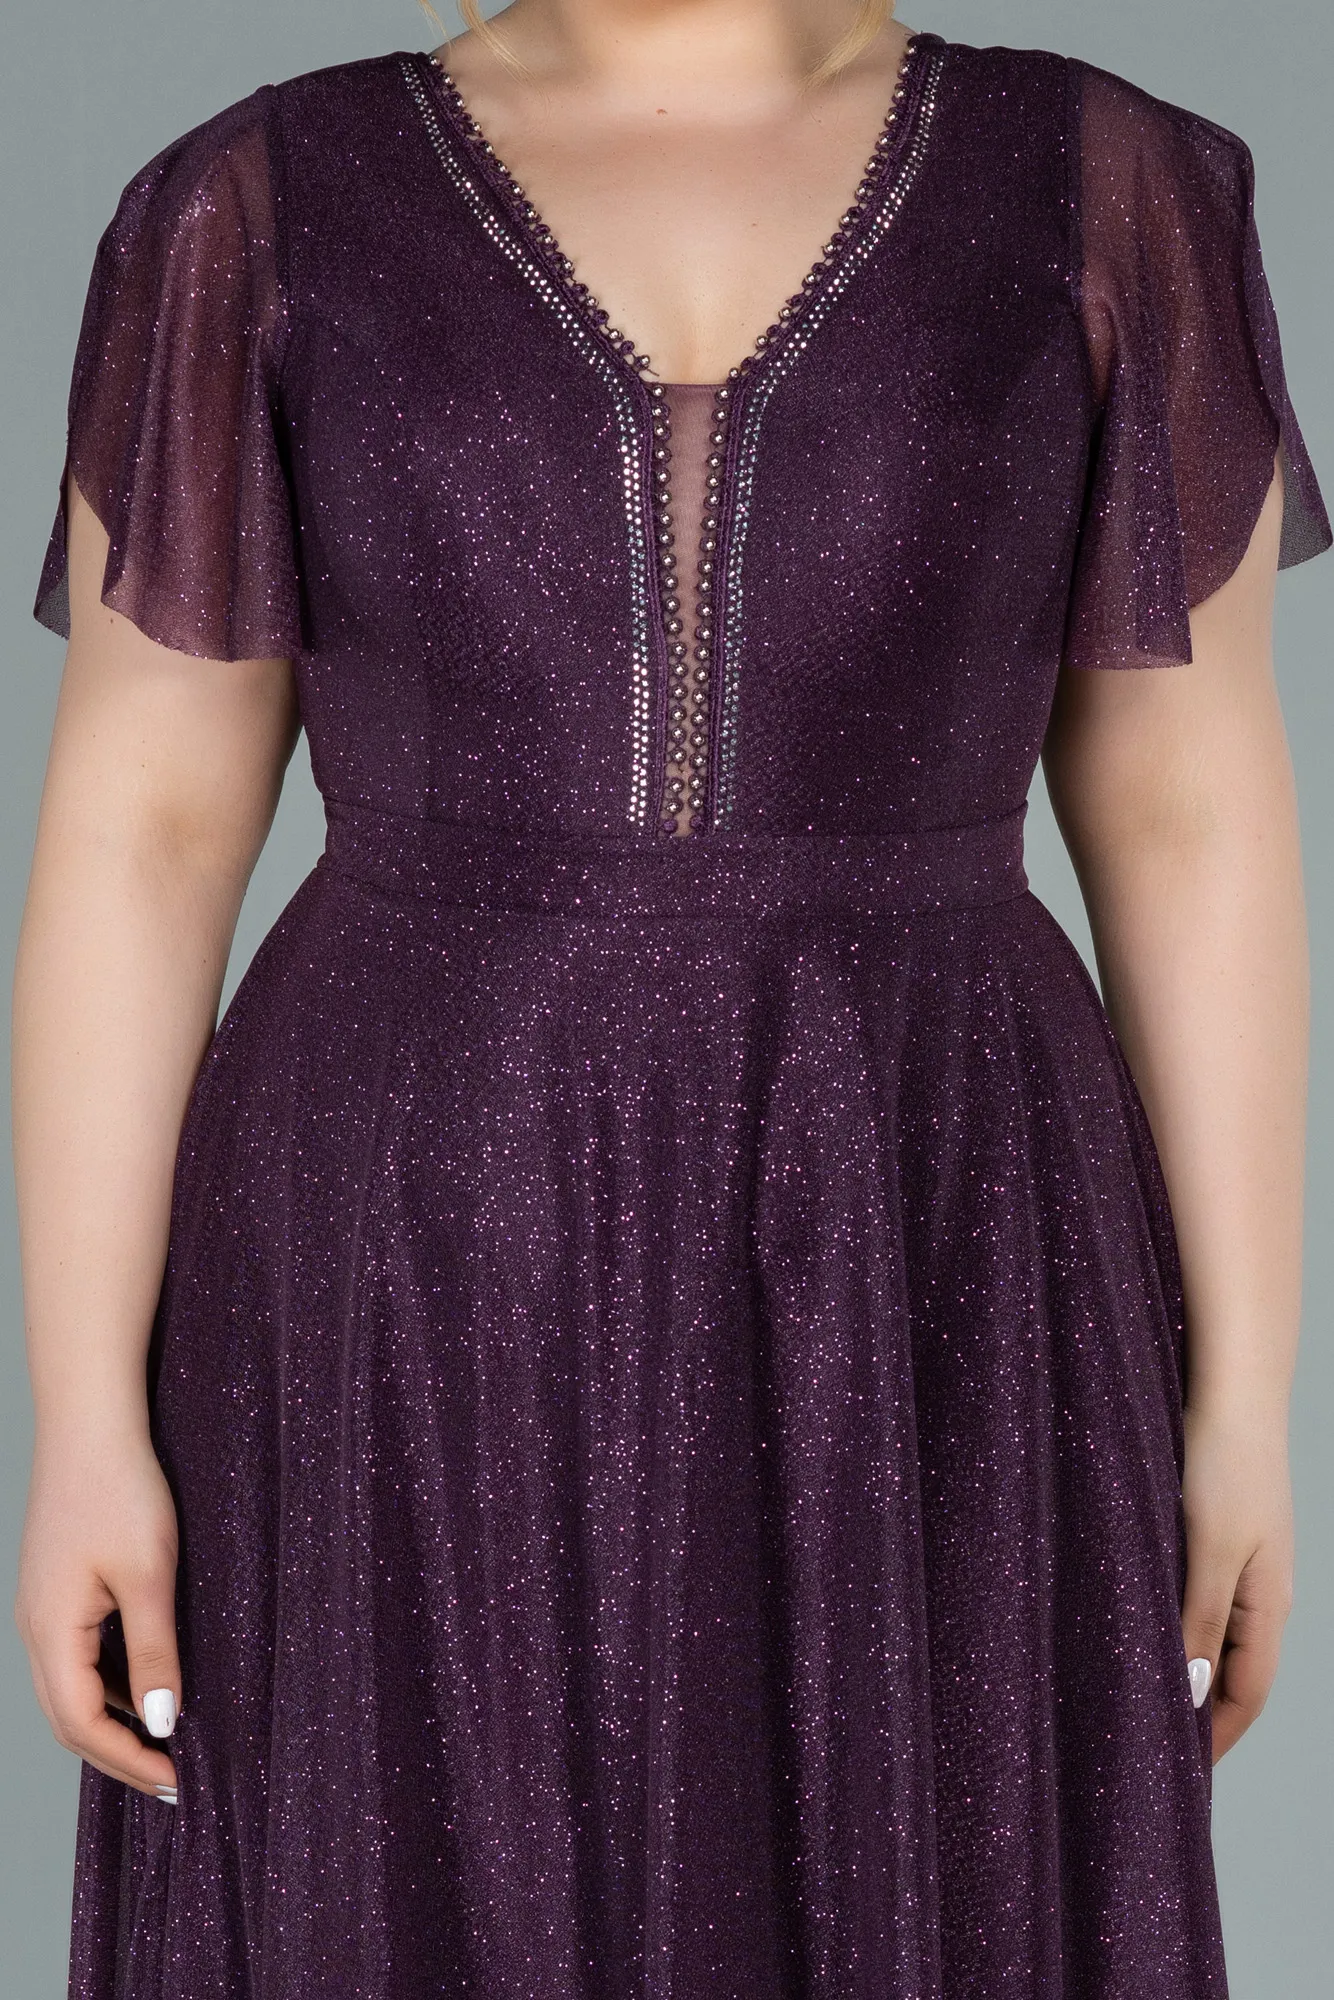 Purple-Long Plus Size Evening Dress ABU2310